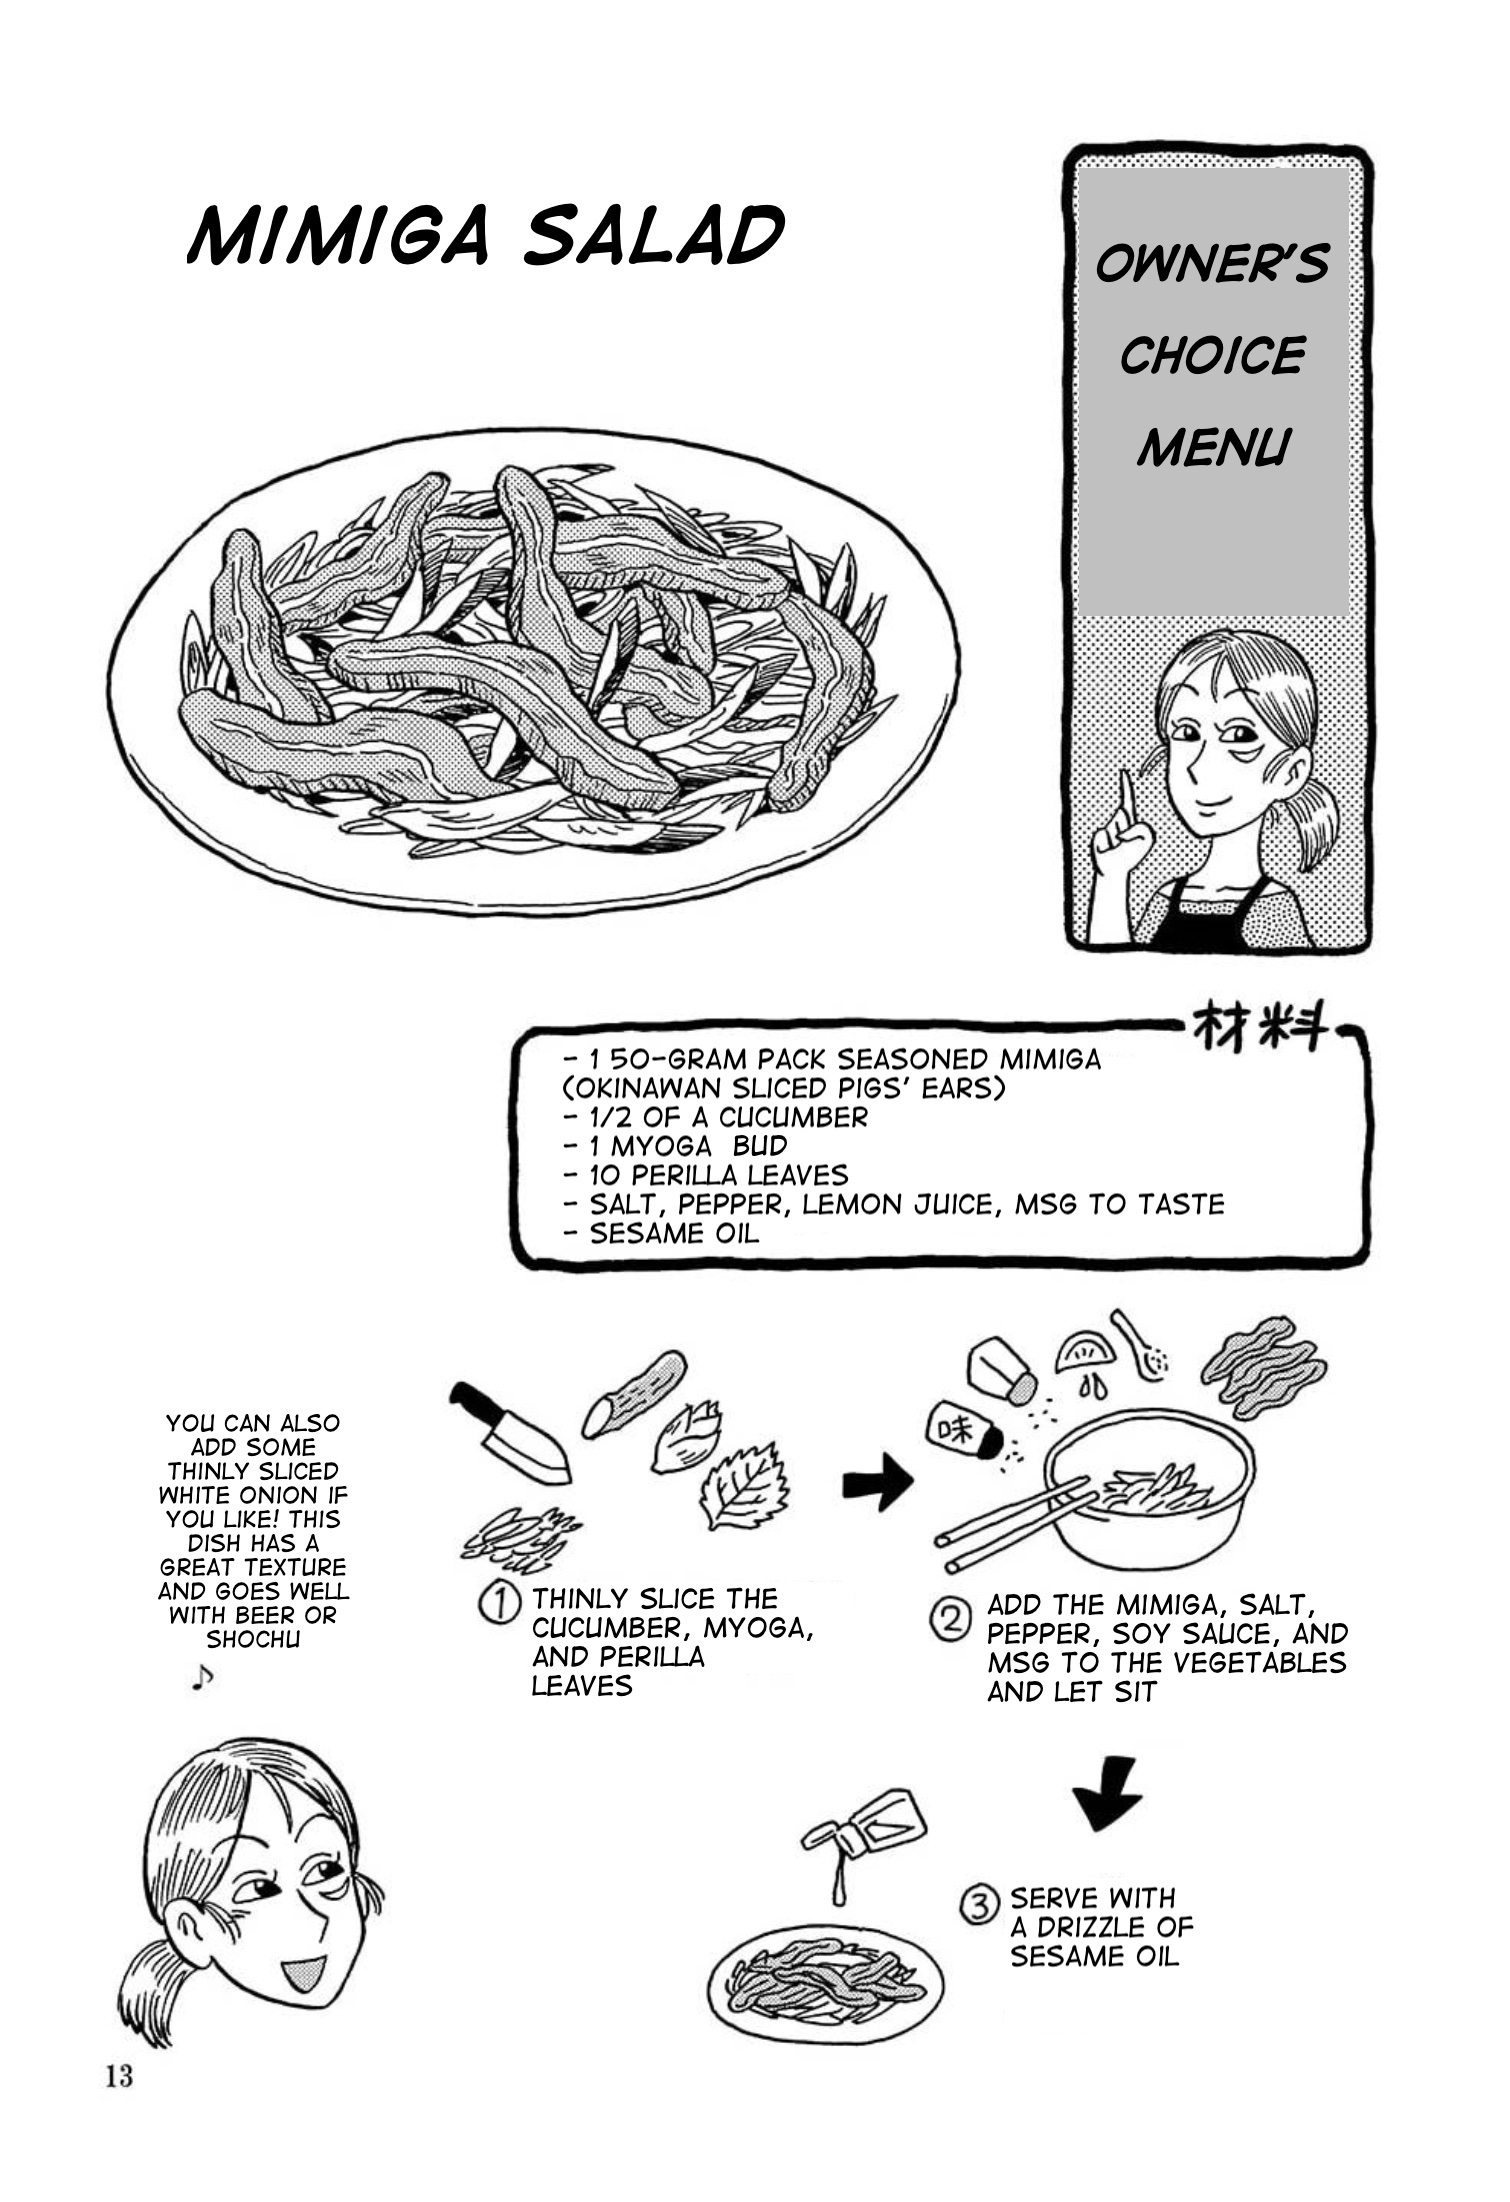 Uramachi Sakaba Vol.1 Chapter 2.5: Owner's Choice Menu: Mimiga Salad - Picture 1